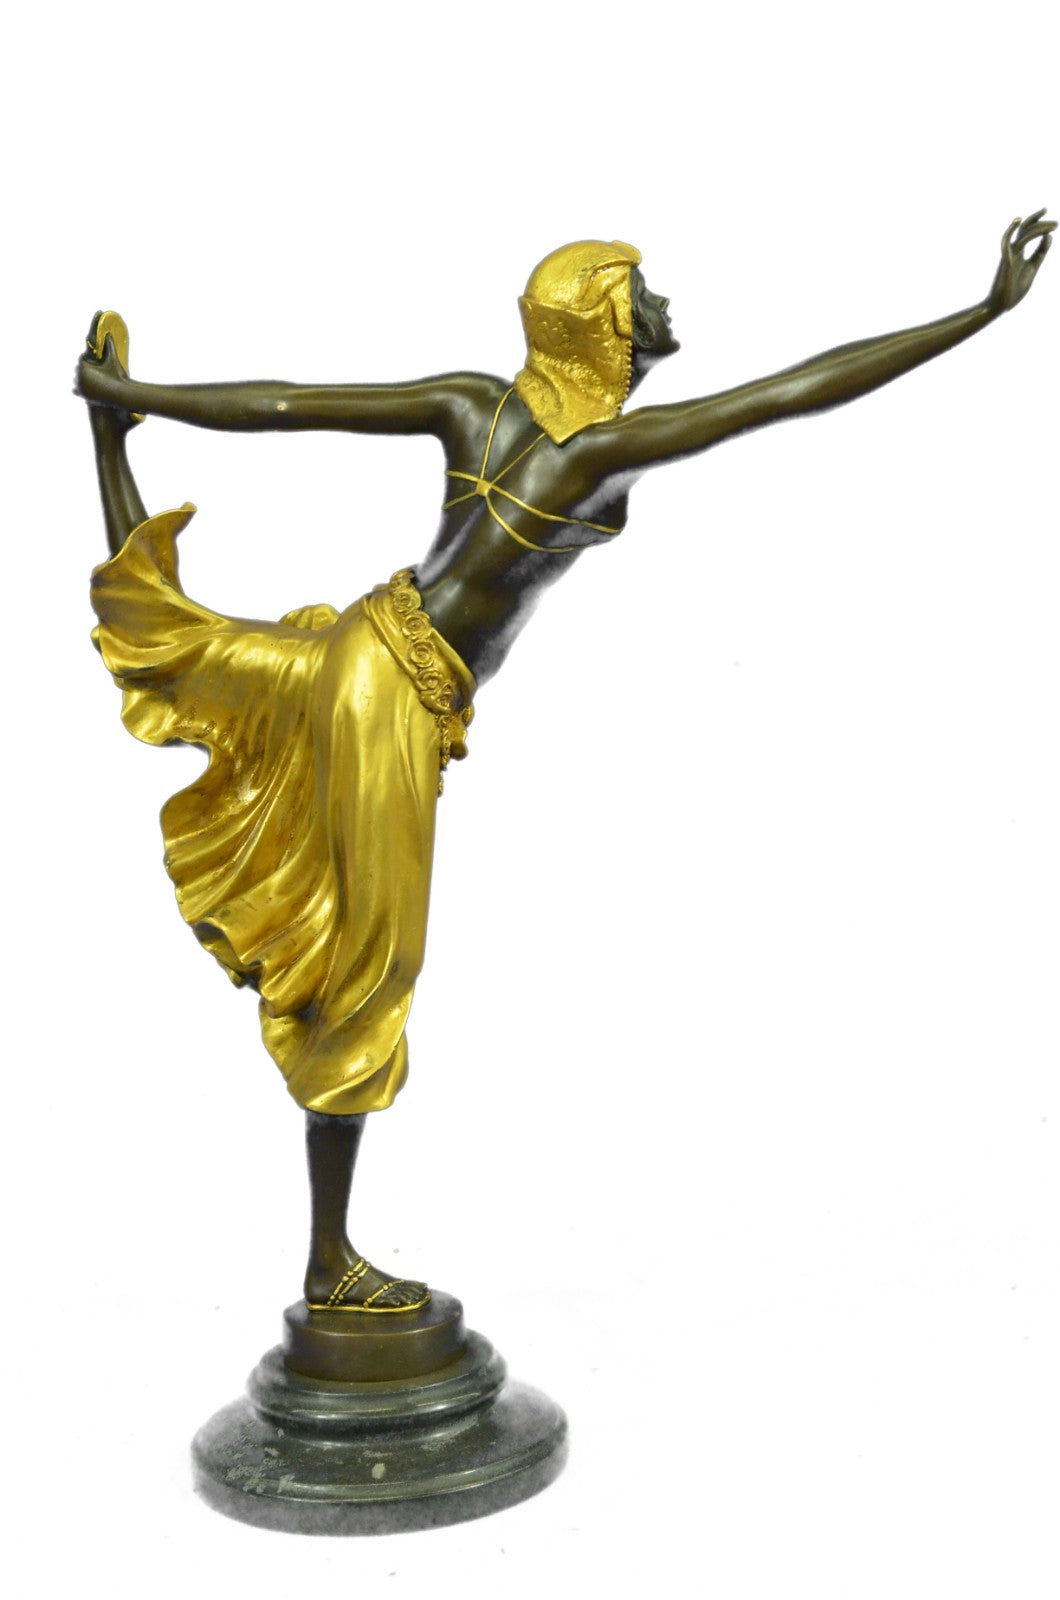 Art Deco/Nouveau Gypsy Dancer Museum Quality Classic Artwork by Colinet Statue